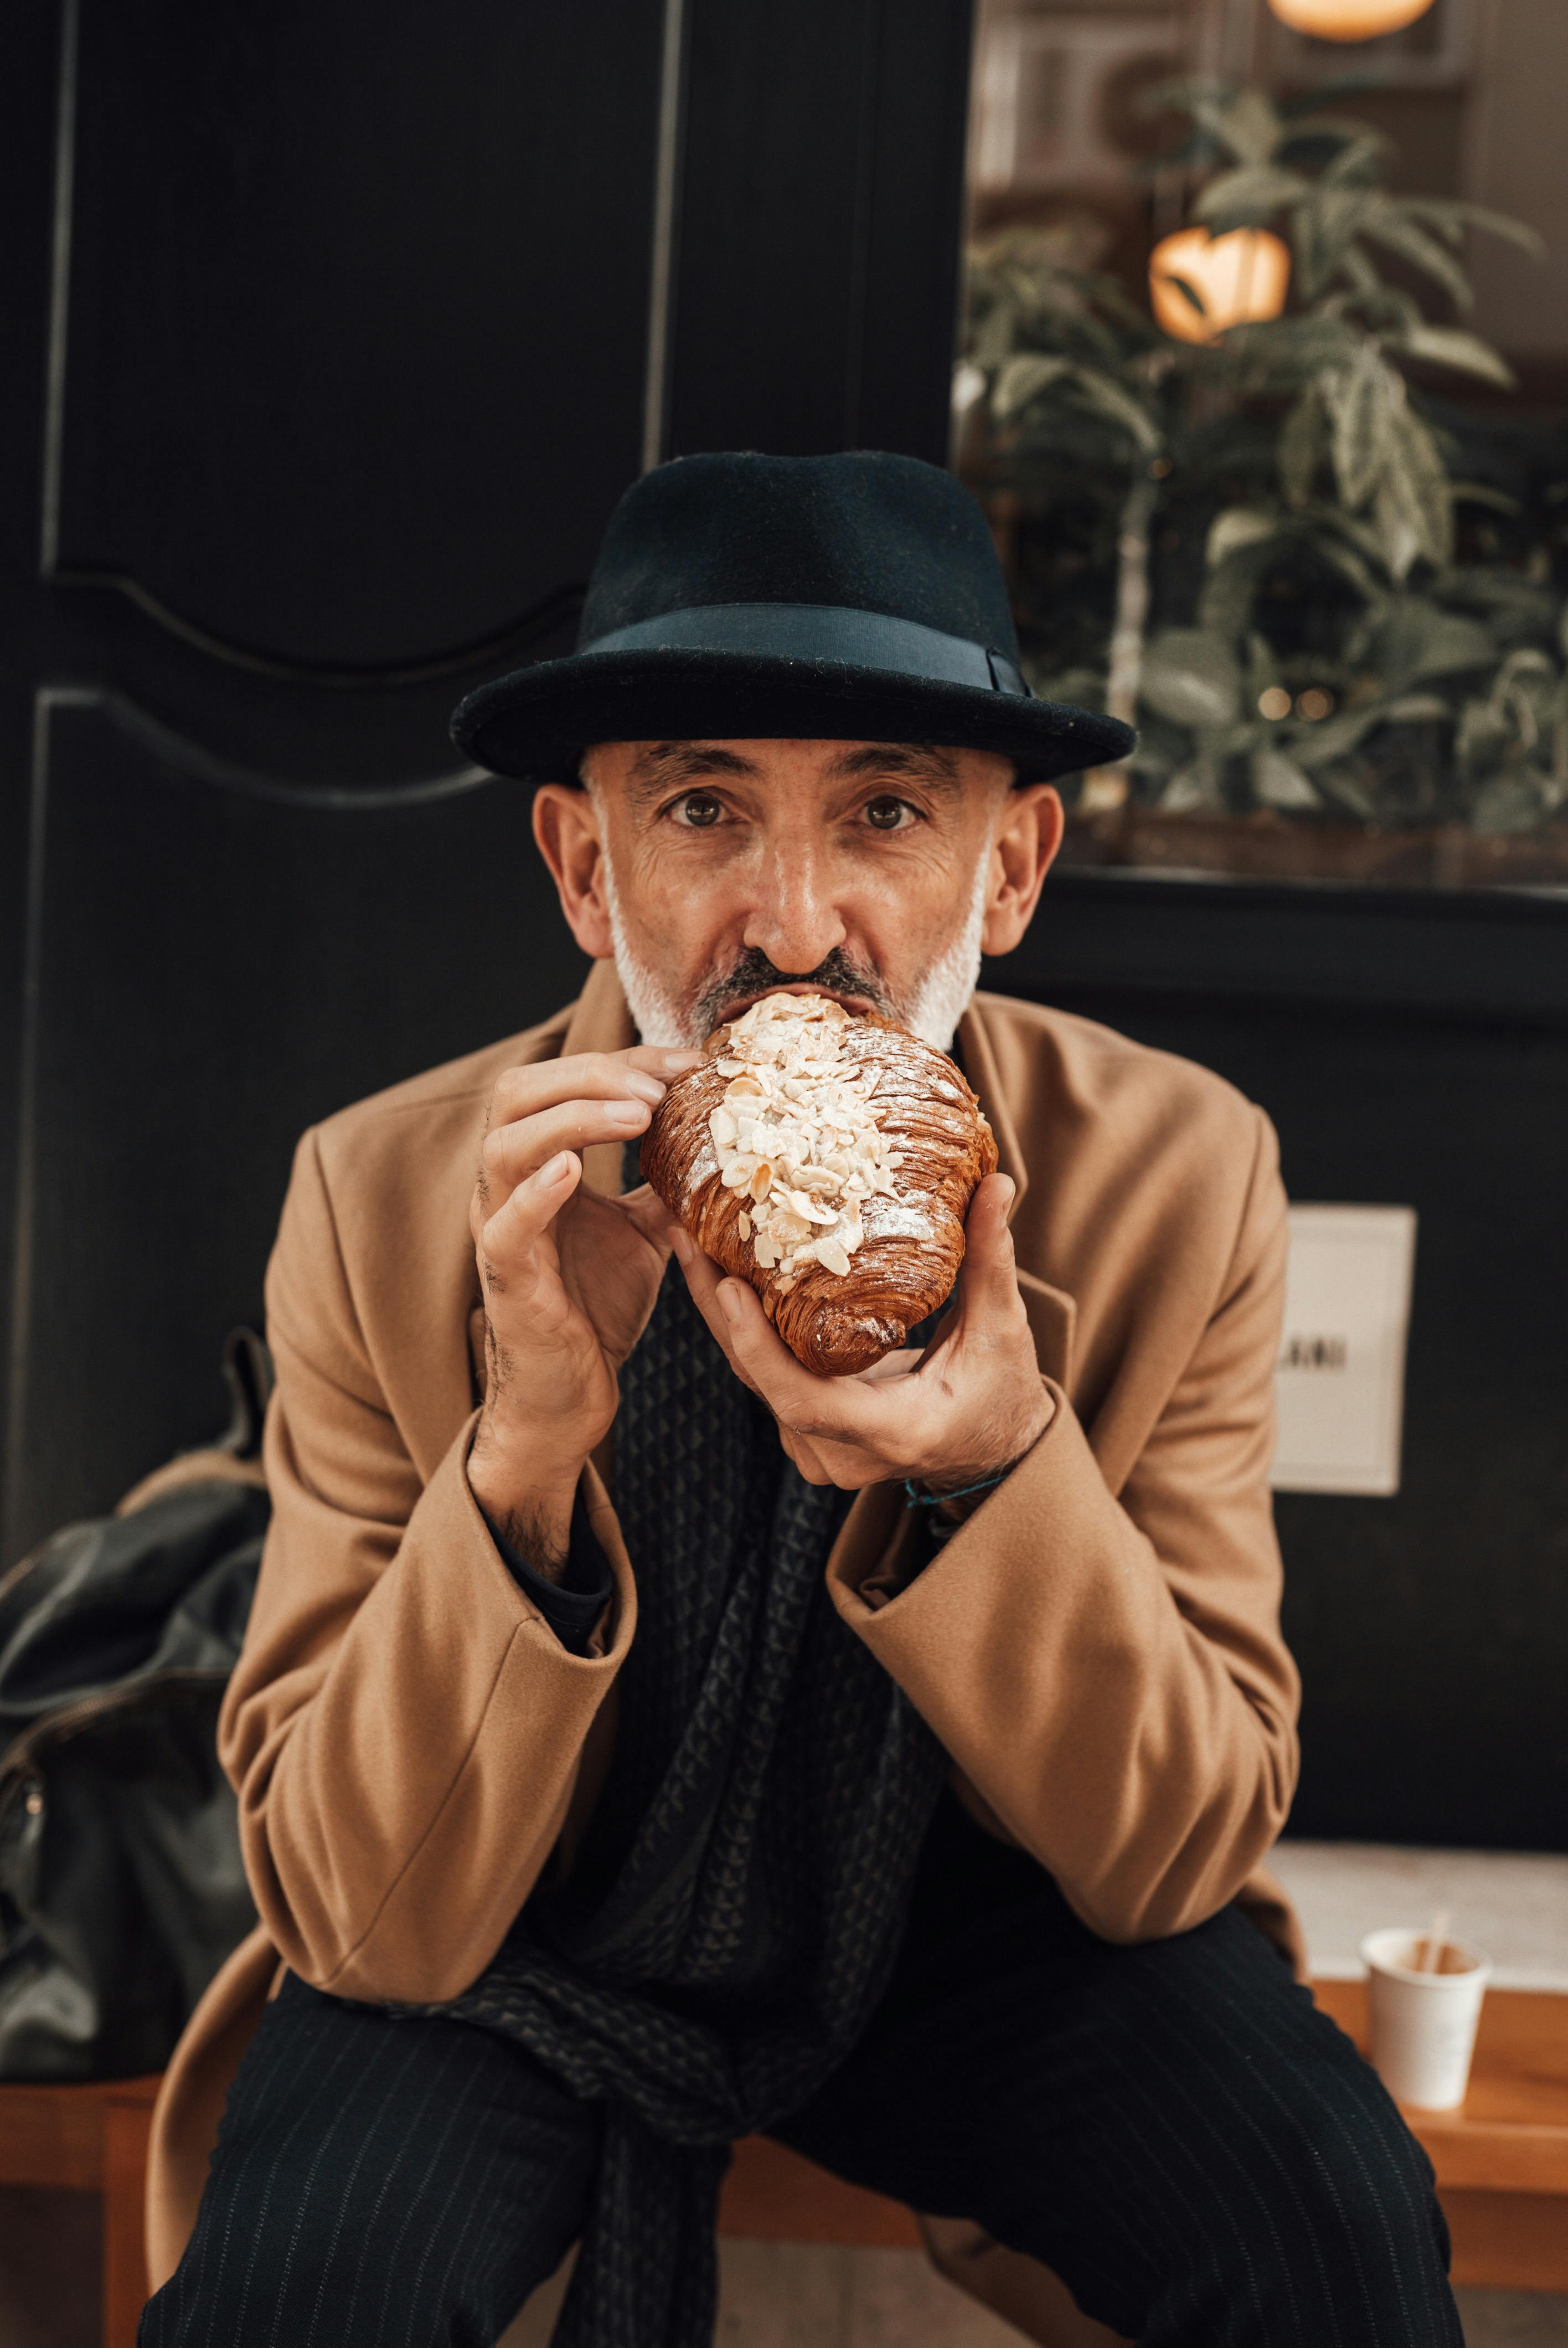 An elderly man eating a croissant | Source: Pexels